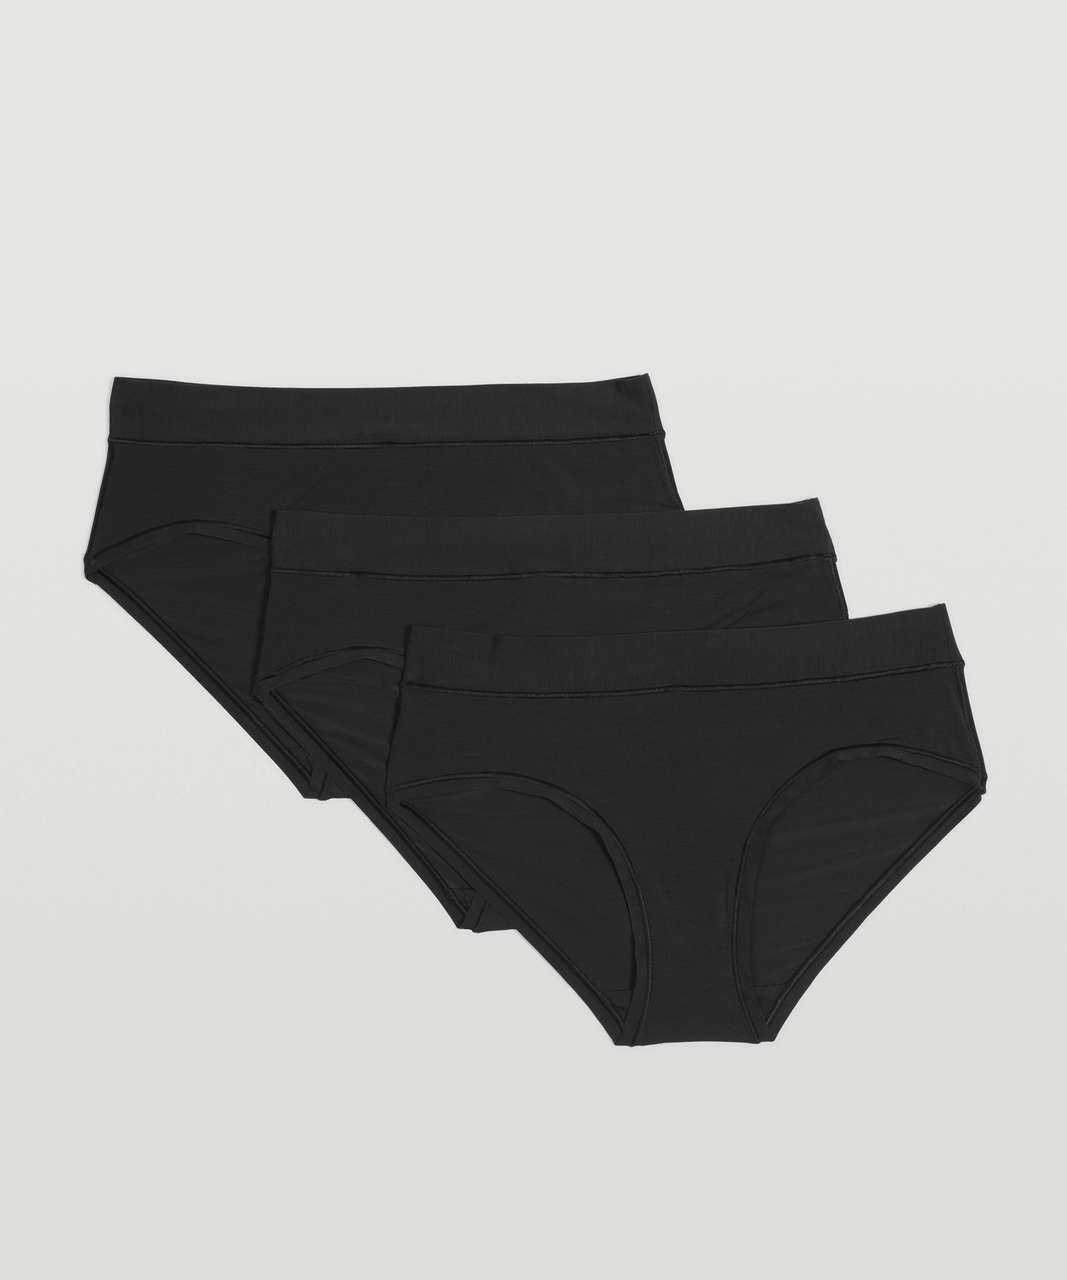 Lululemon UnderEase Mid Rise Hipster Underwear 3 Pack - Black